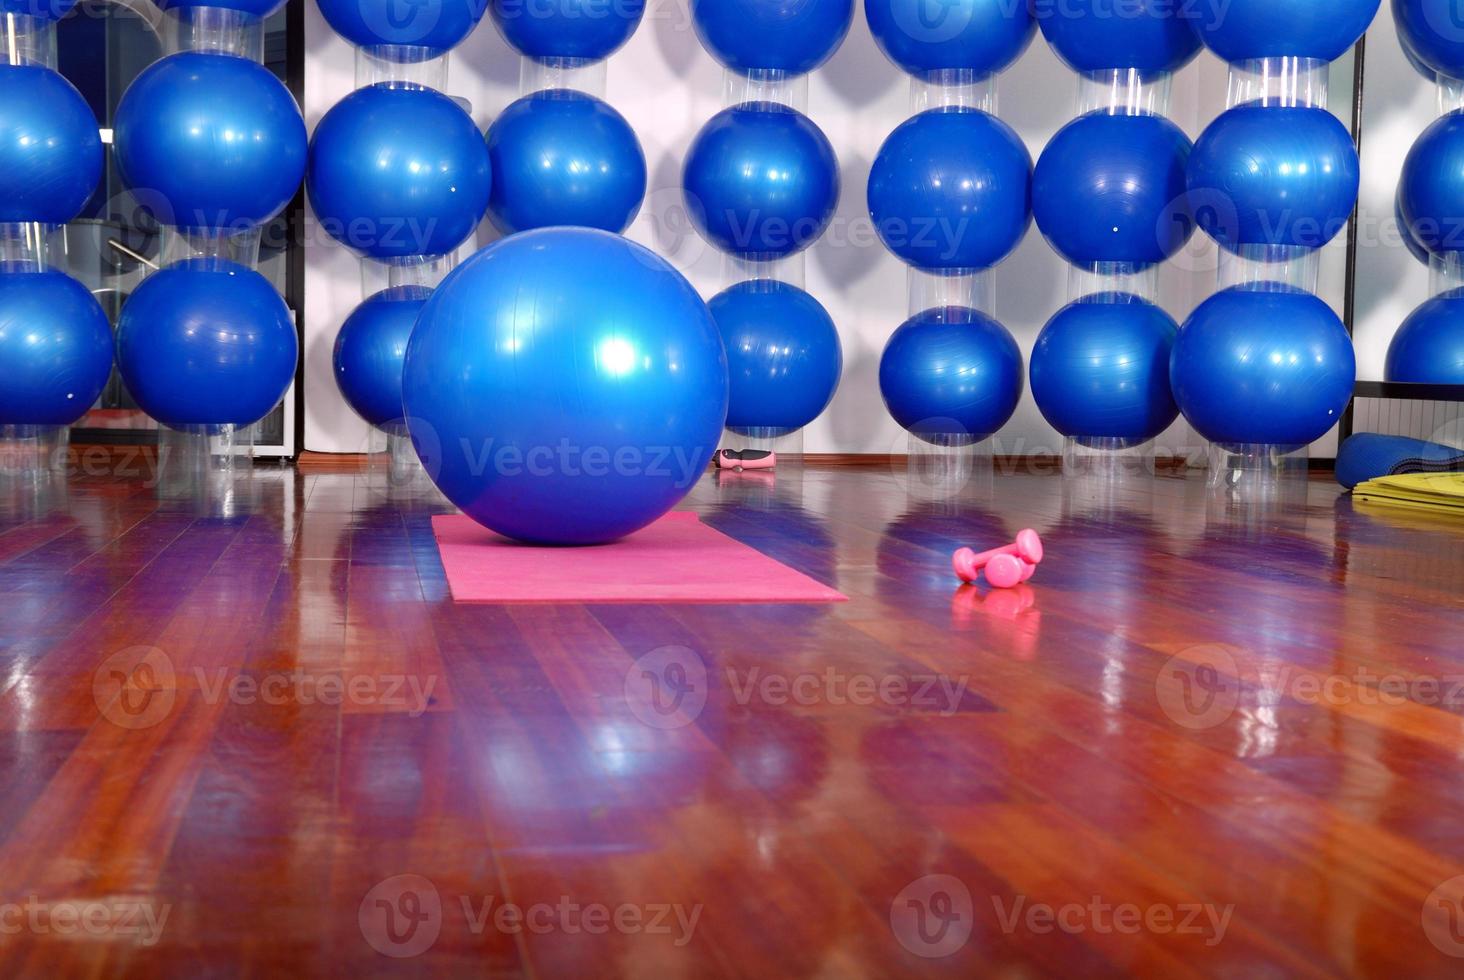 Fitness-Studio mit blauen Pilates-Bällen foto